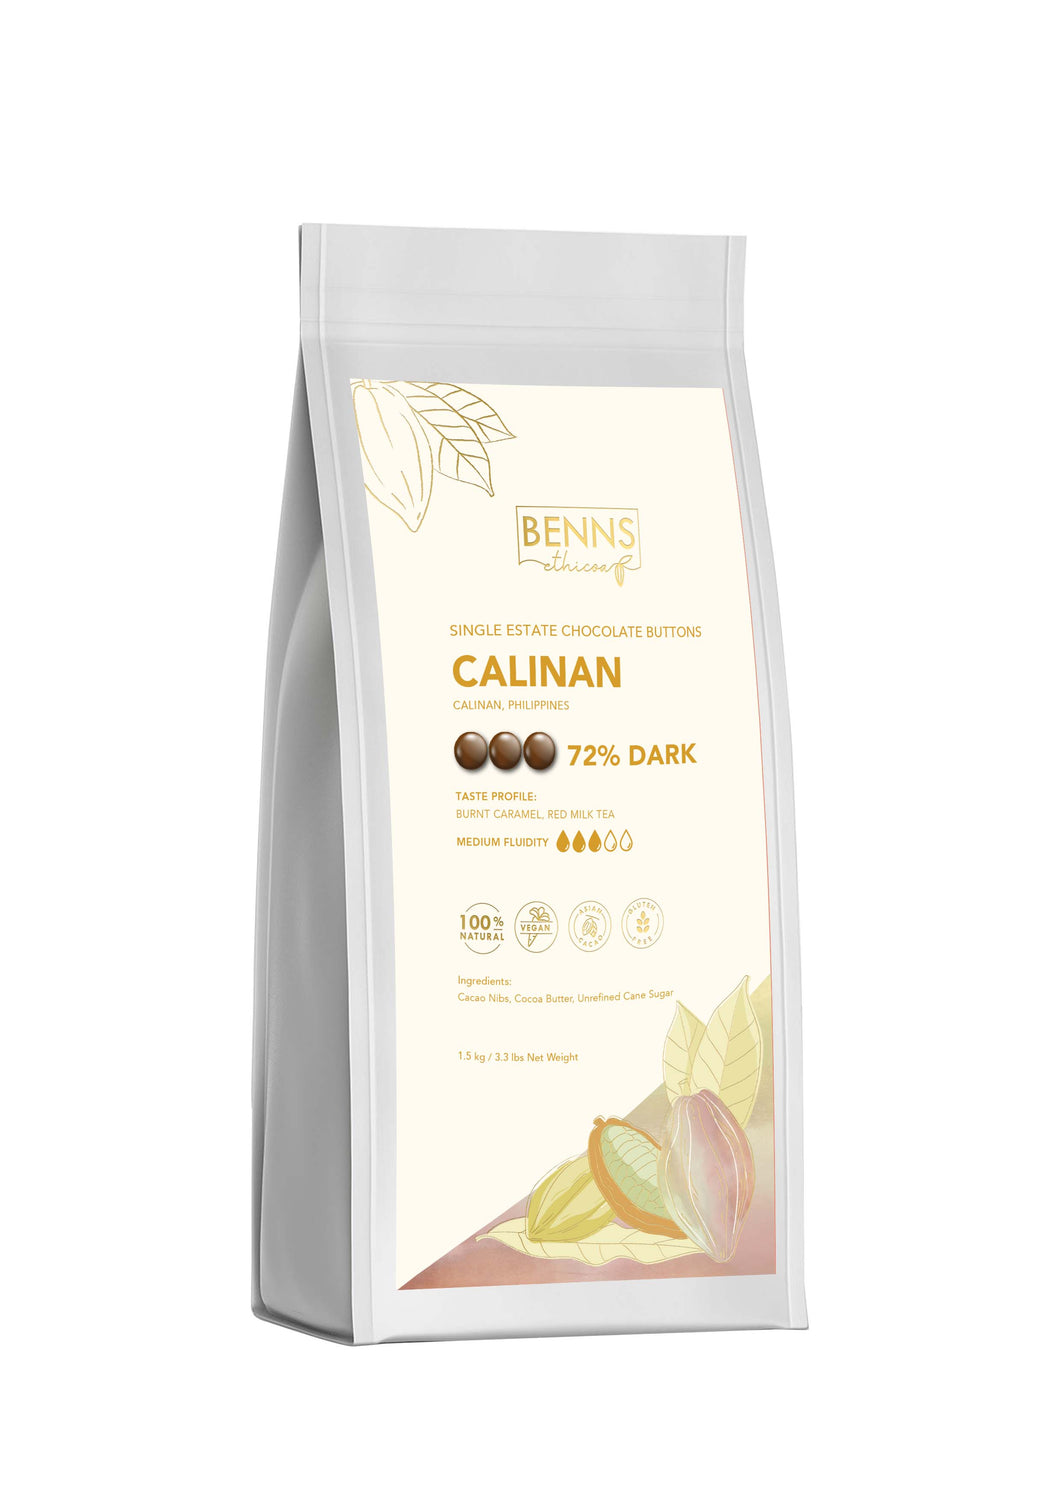 Calinan - 72% Dark Chocolate Buttons (1.5kg)